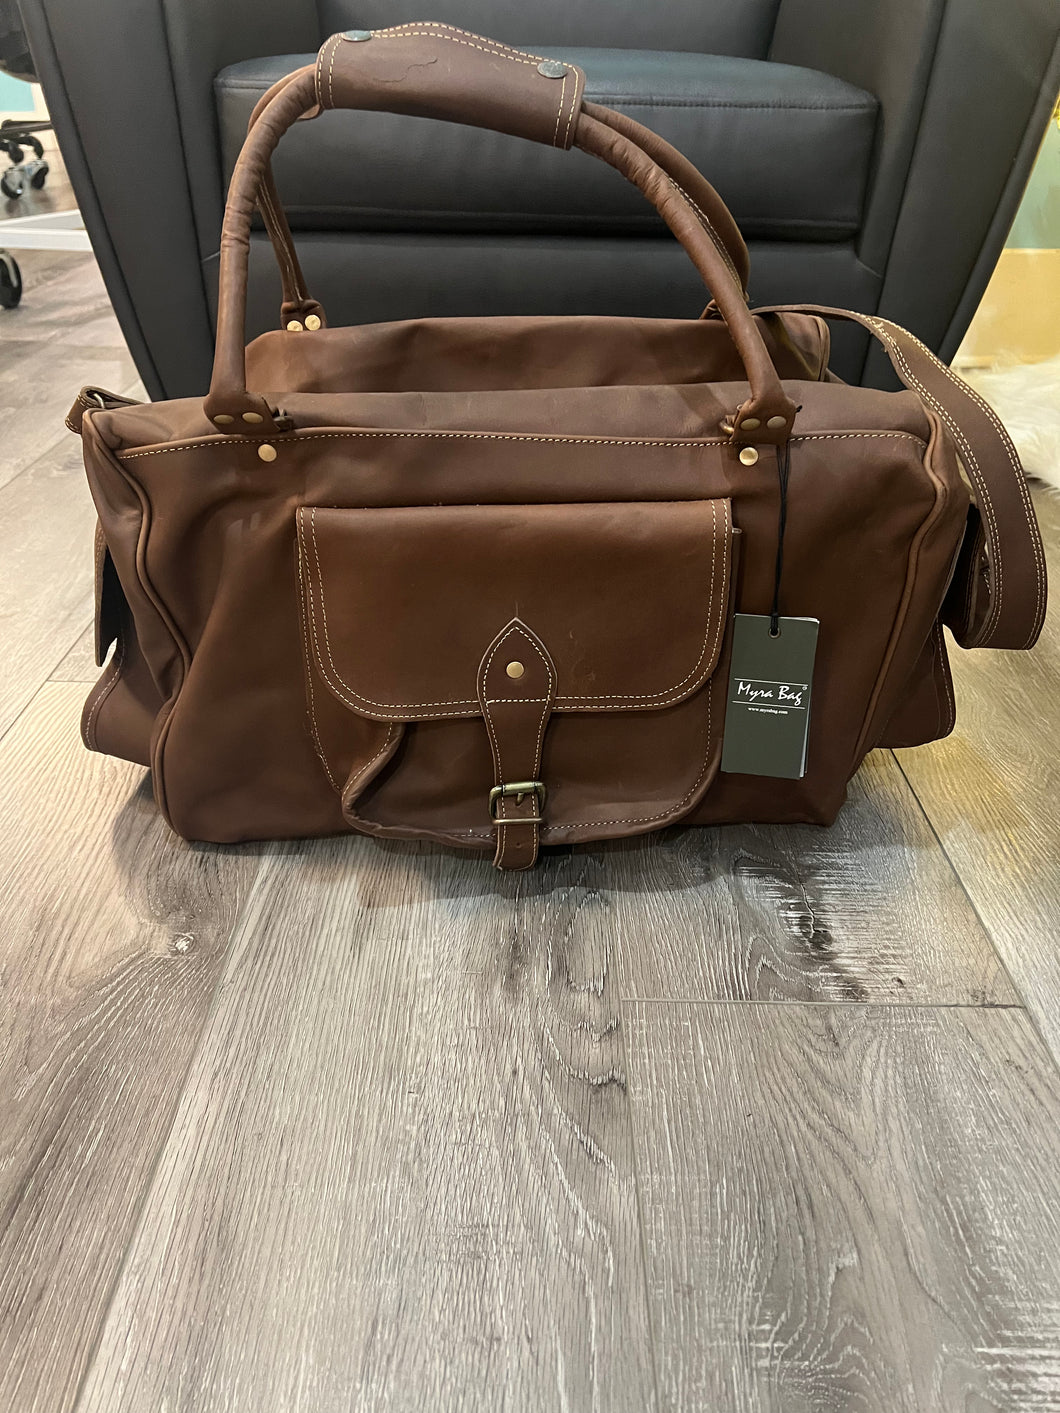 Myra Traveler Bag